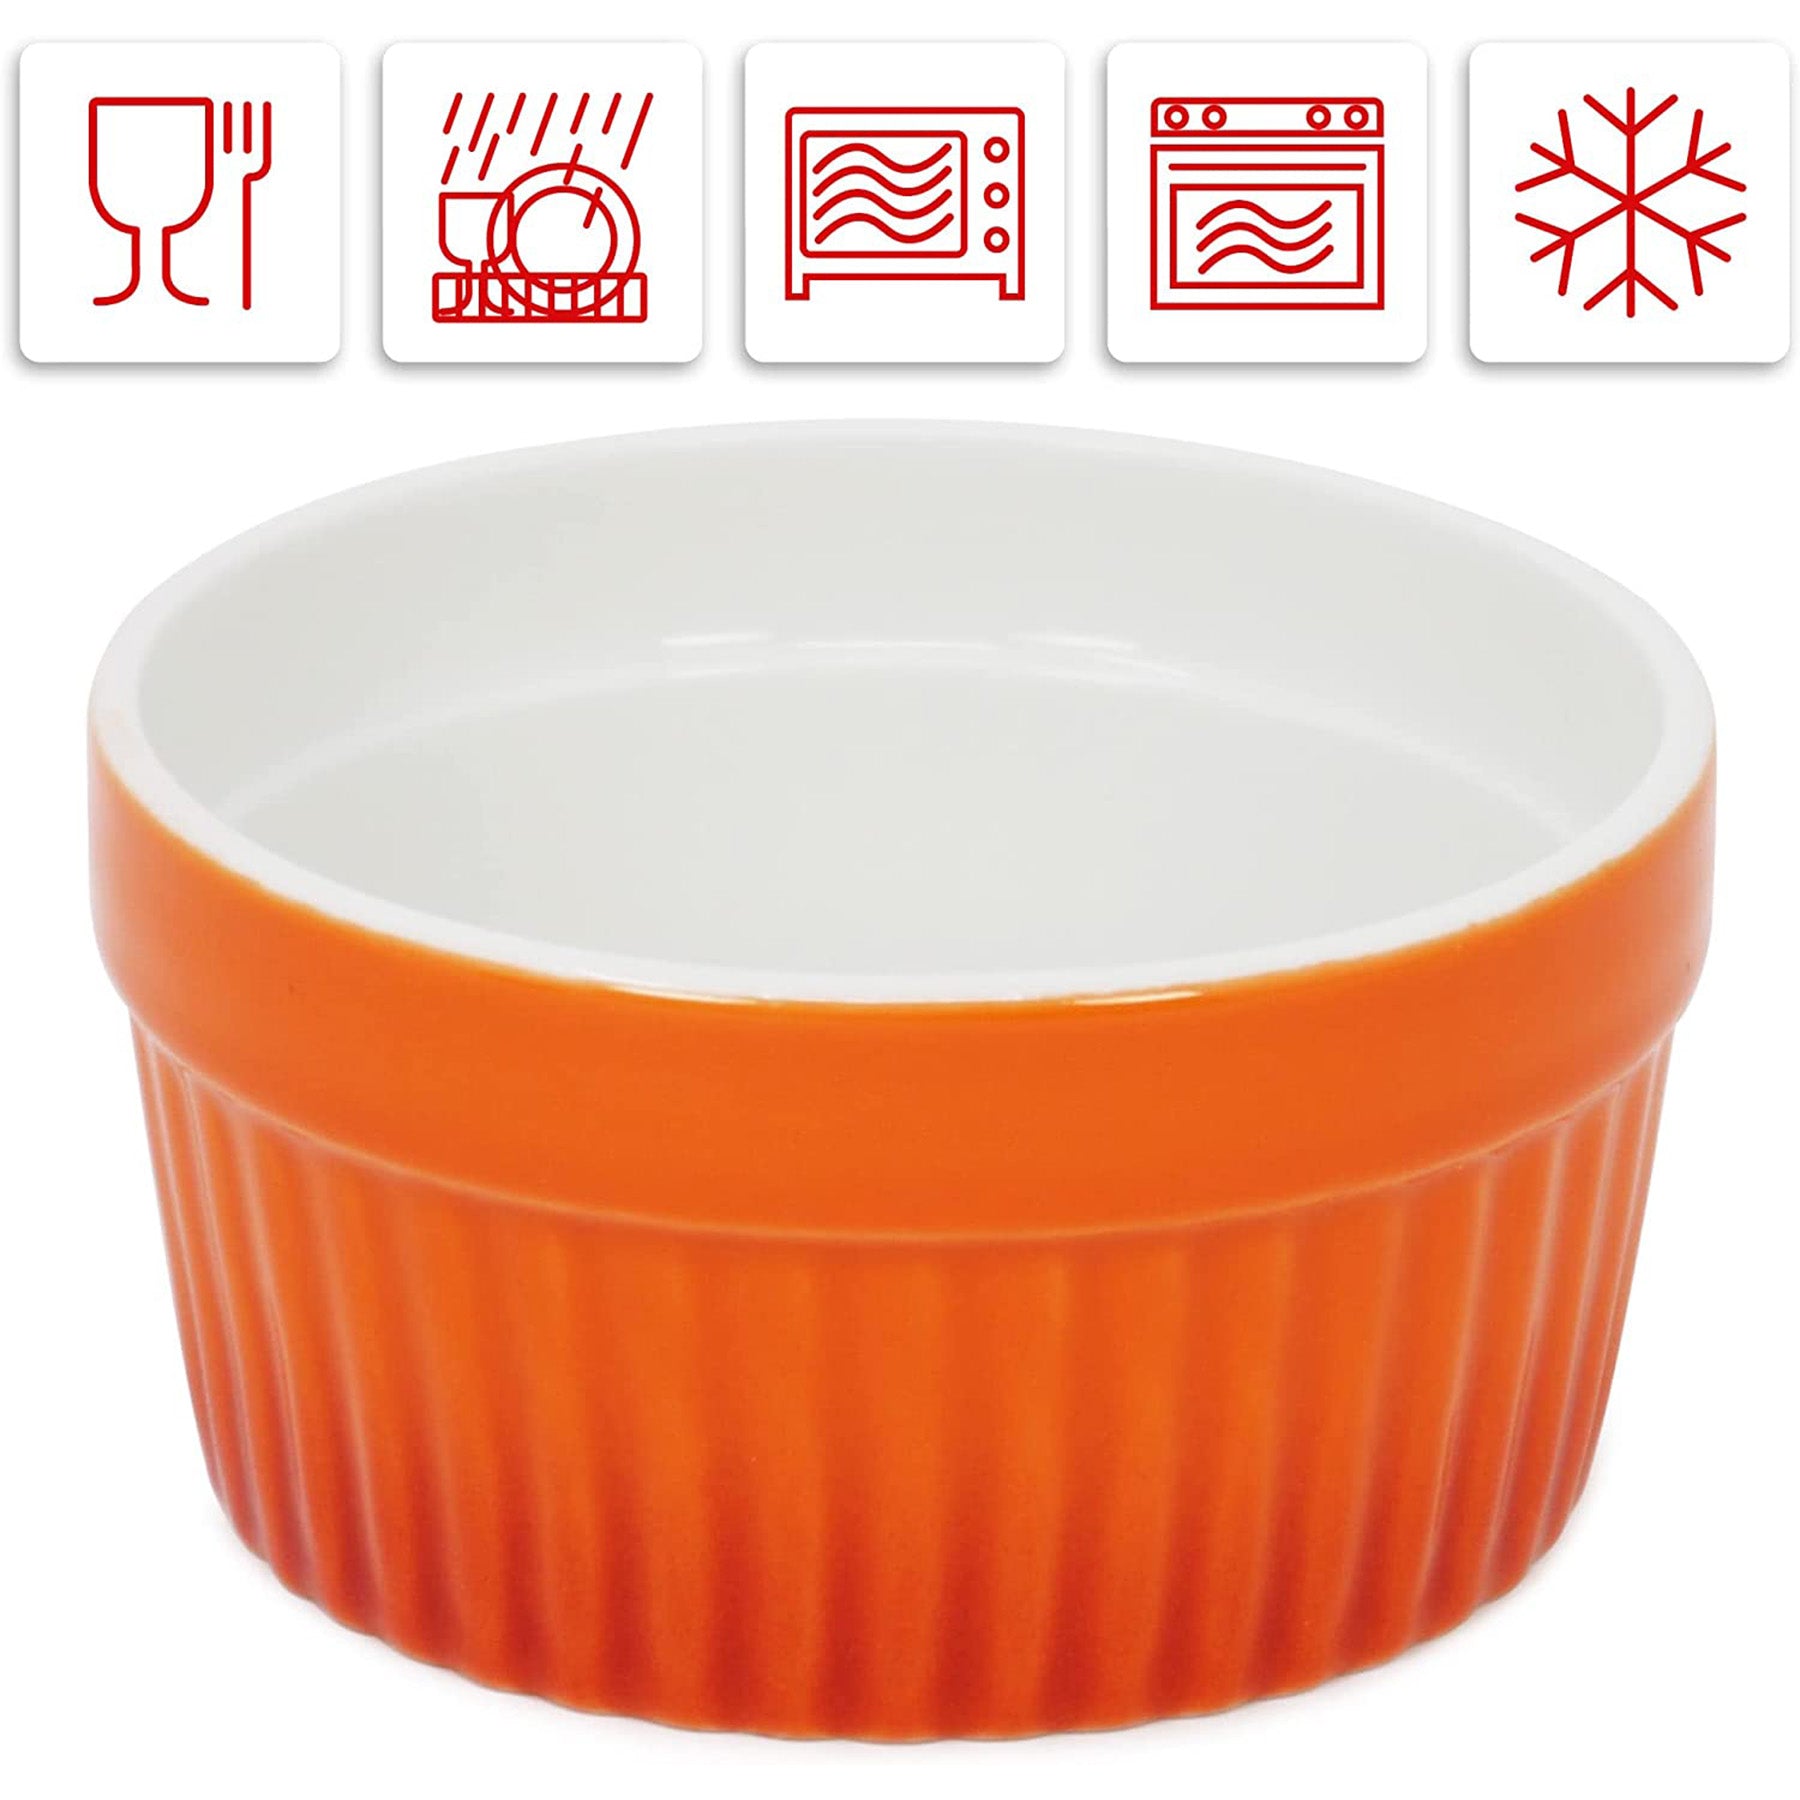 2 pieces Baking Dishes - Orange Color